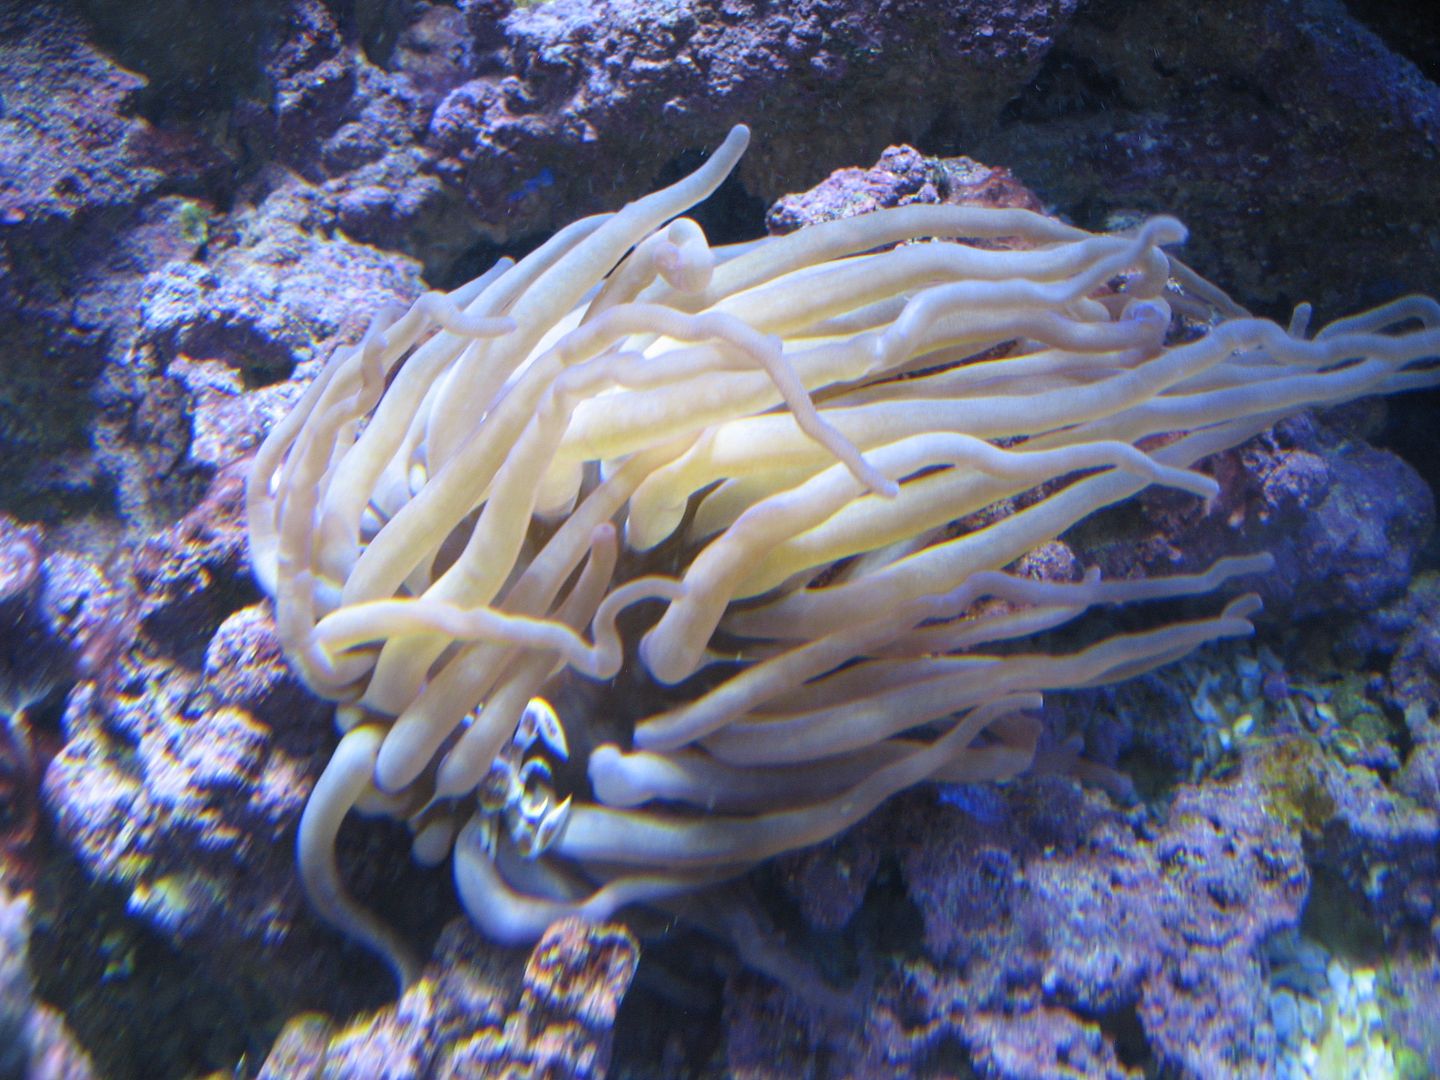 Aquarium_CrabInPurpleCondy_12JUN2012_zpsb0c8cabd.jpg